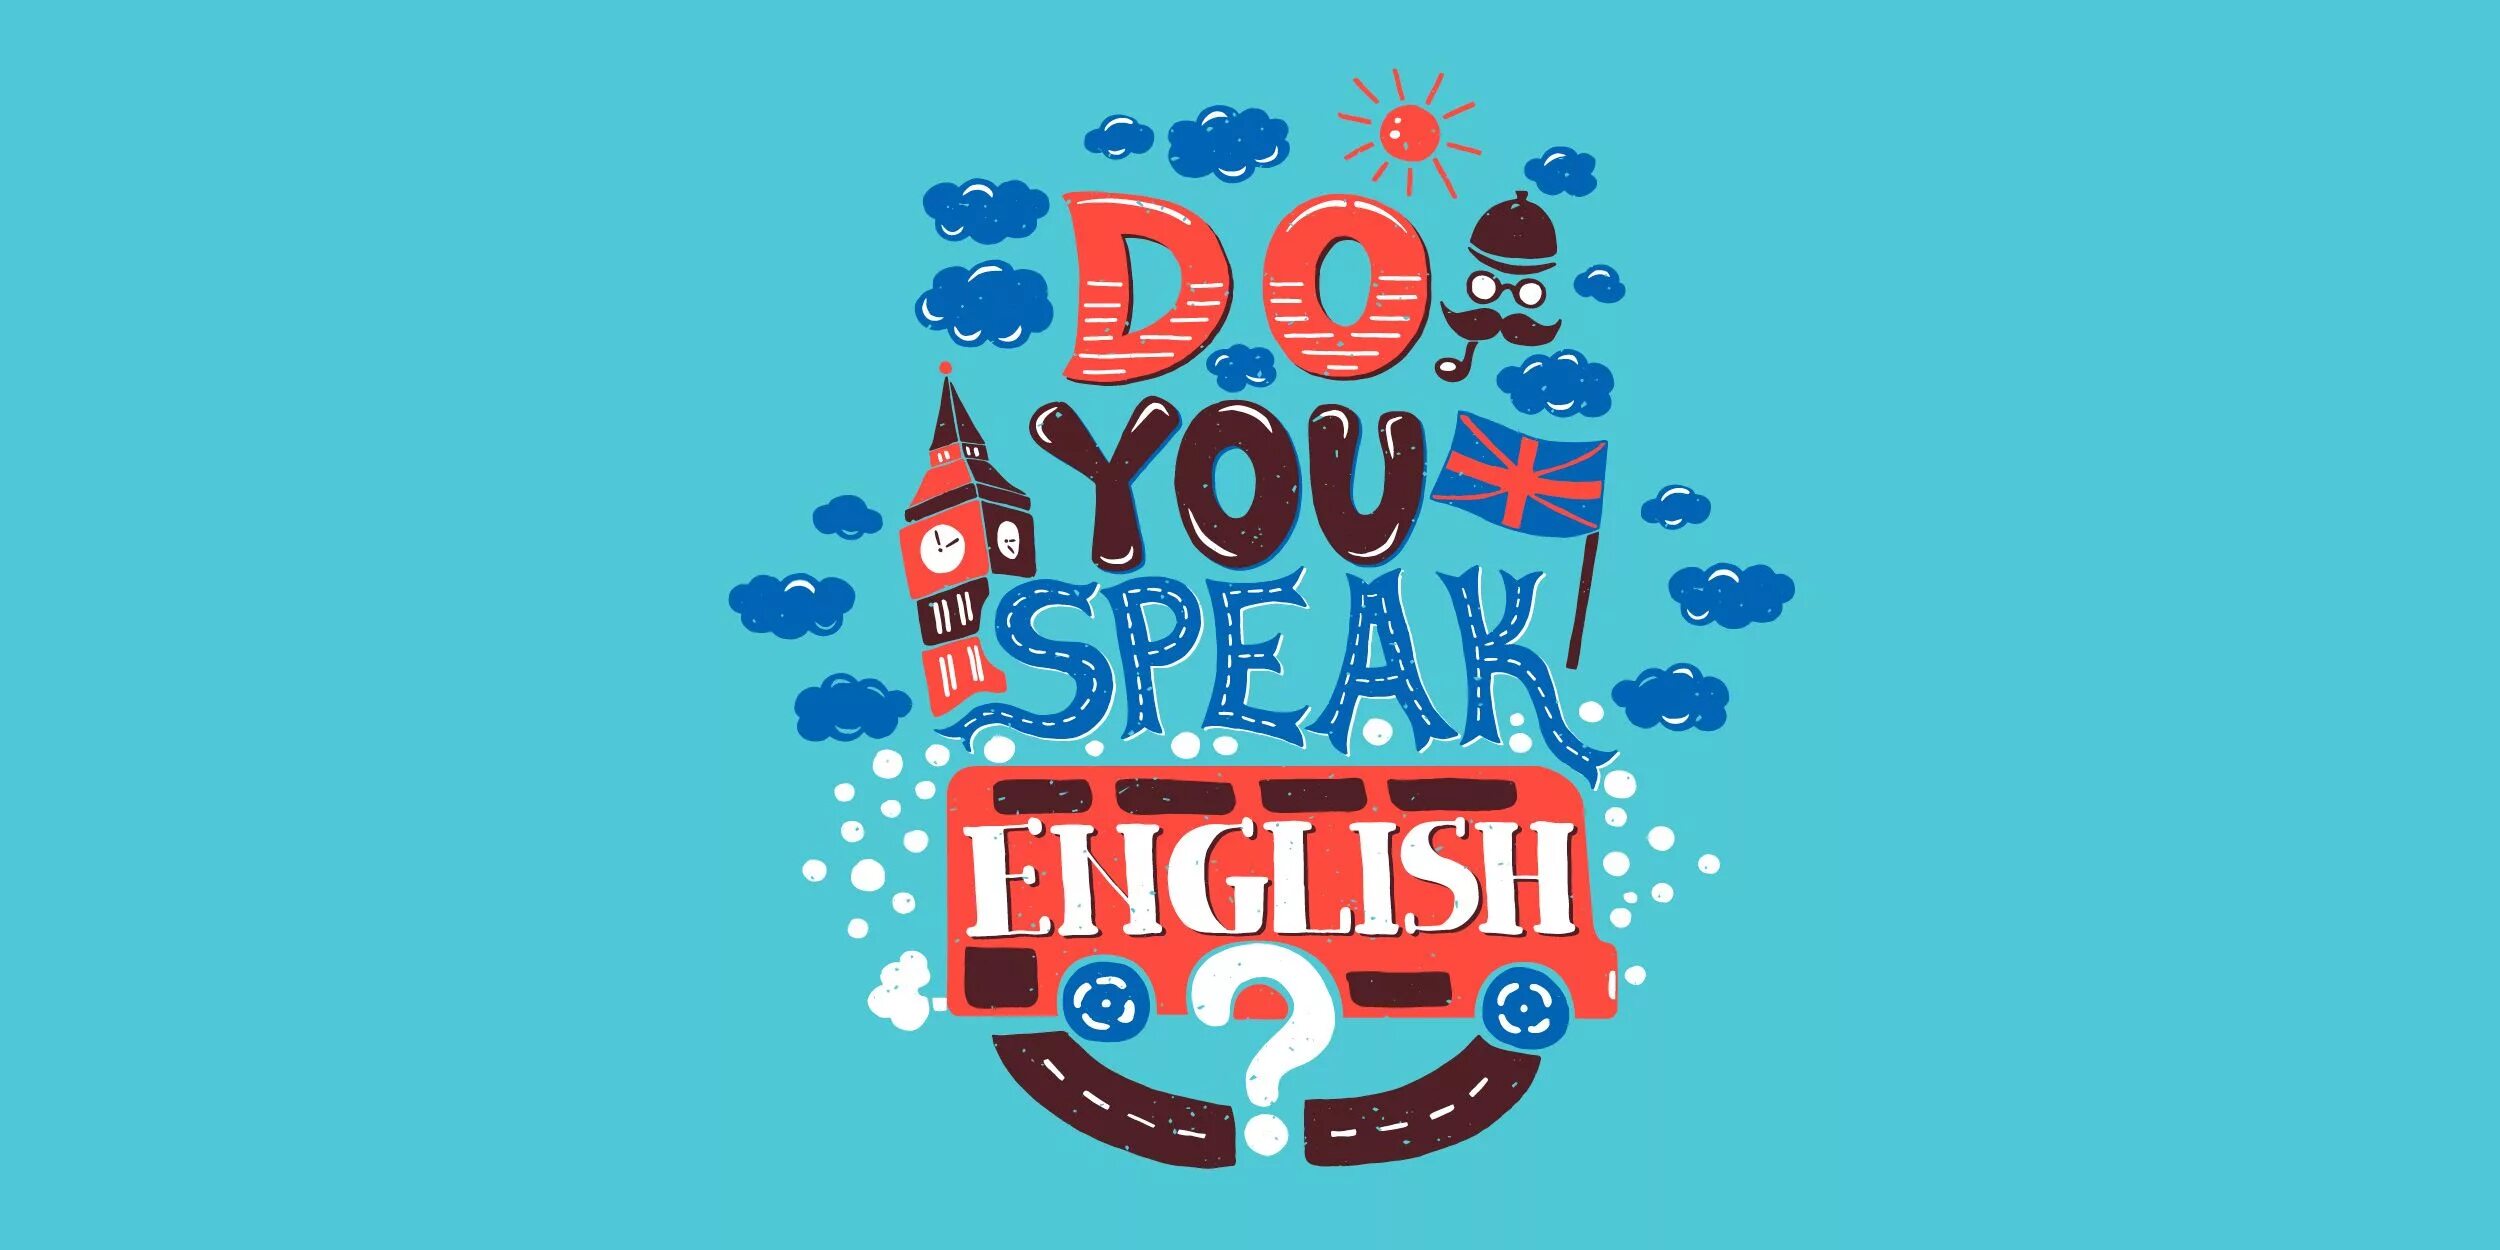 Английский язык. Фон английский язык. English заставка. Изучение английского фон. Do you speak english yes